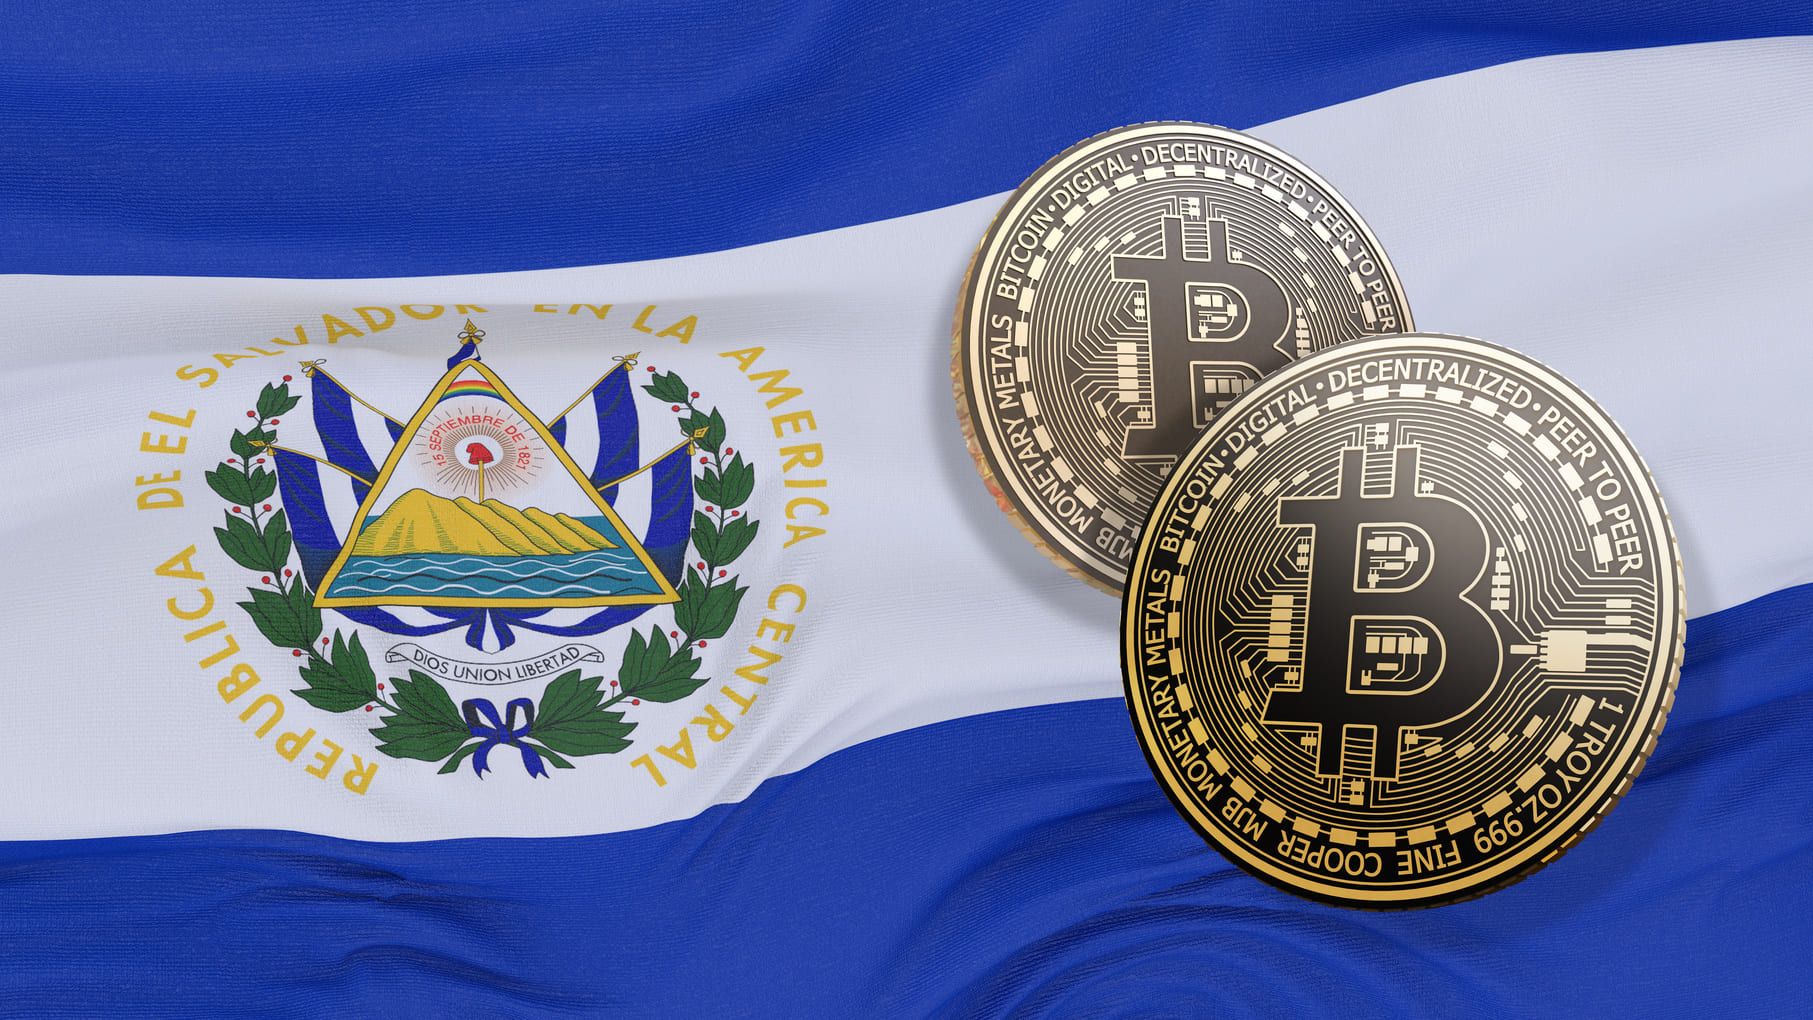 For 71% of the El Salvador population, Bitcoin did not bring benefits